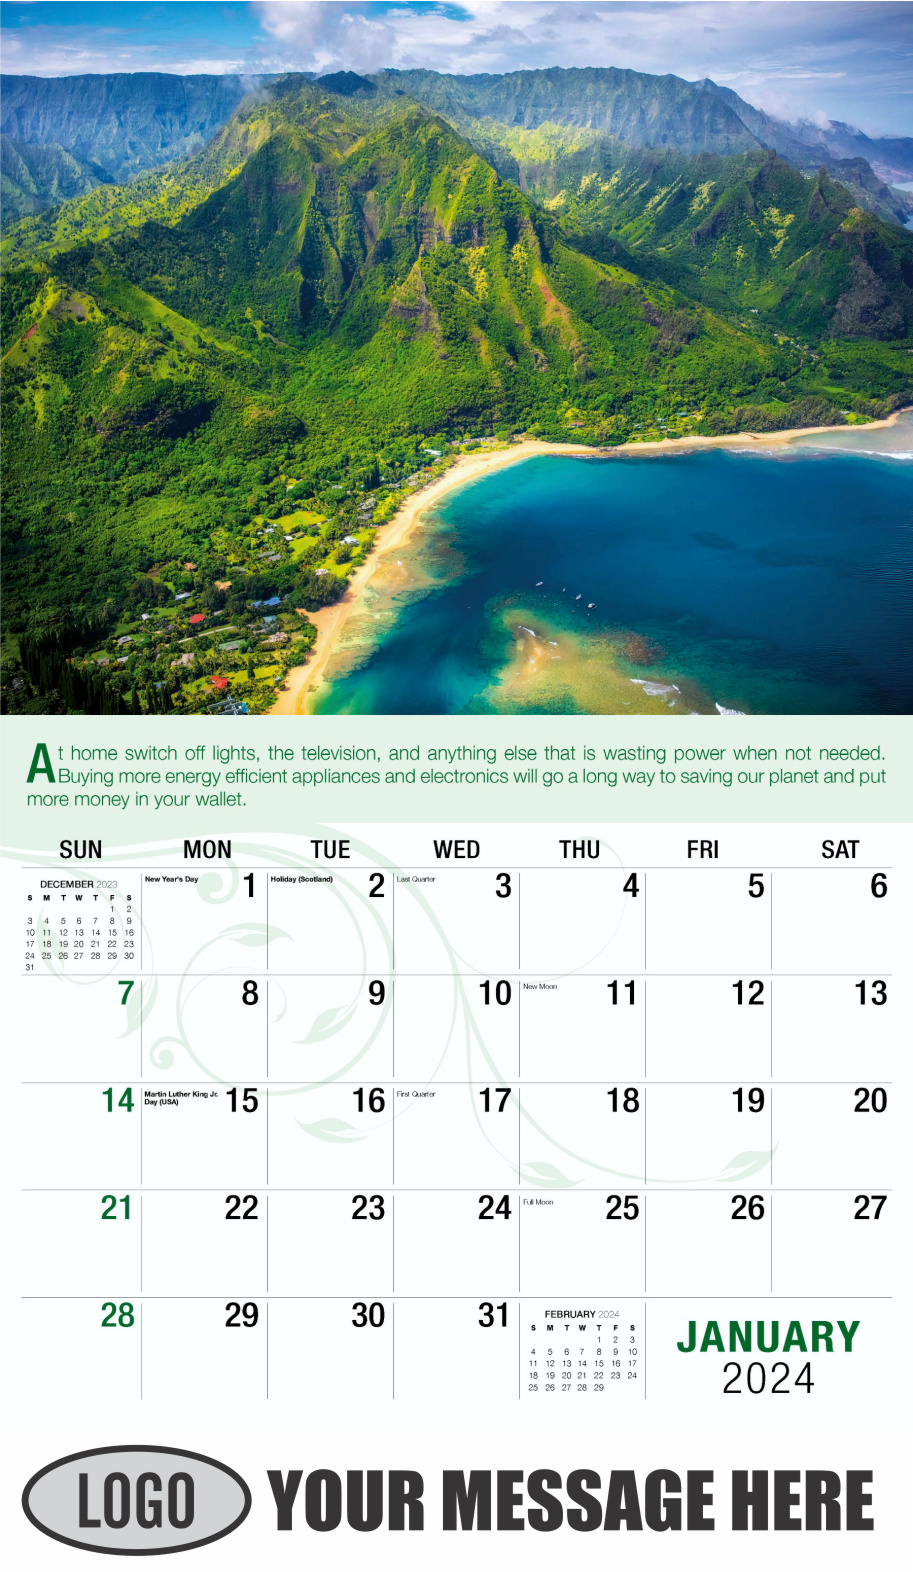 Go Green 2024 Business Promotion Calendar - January